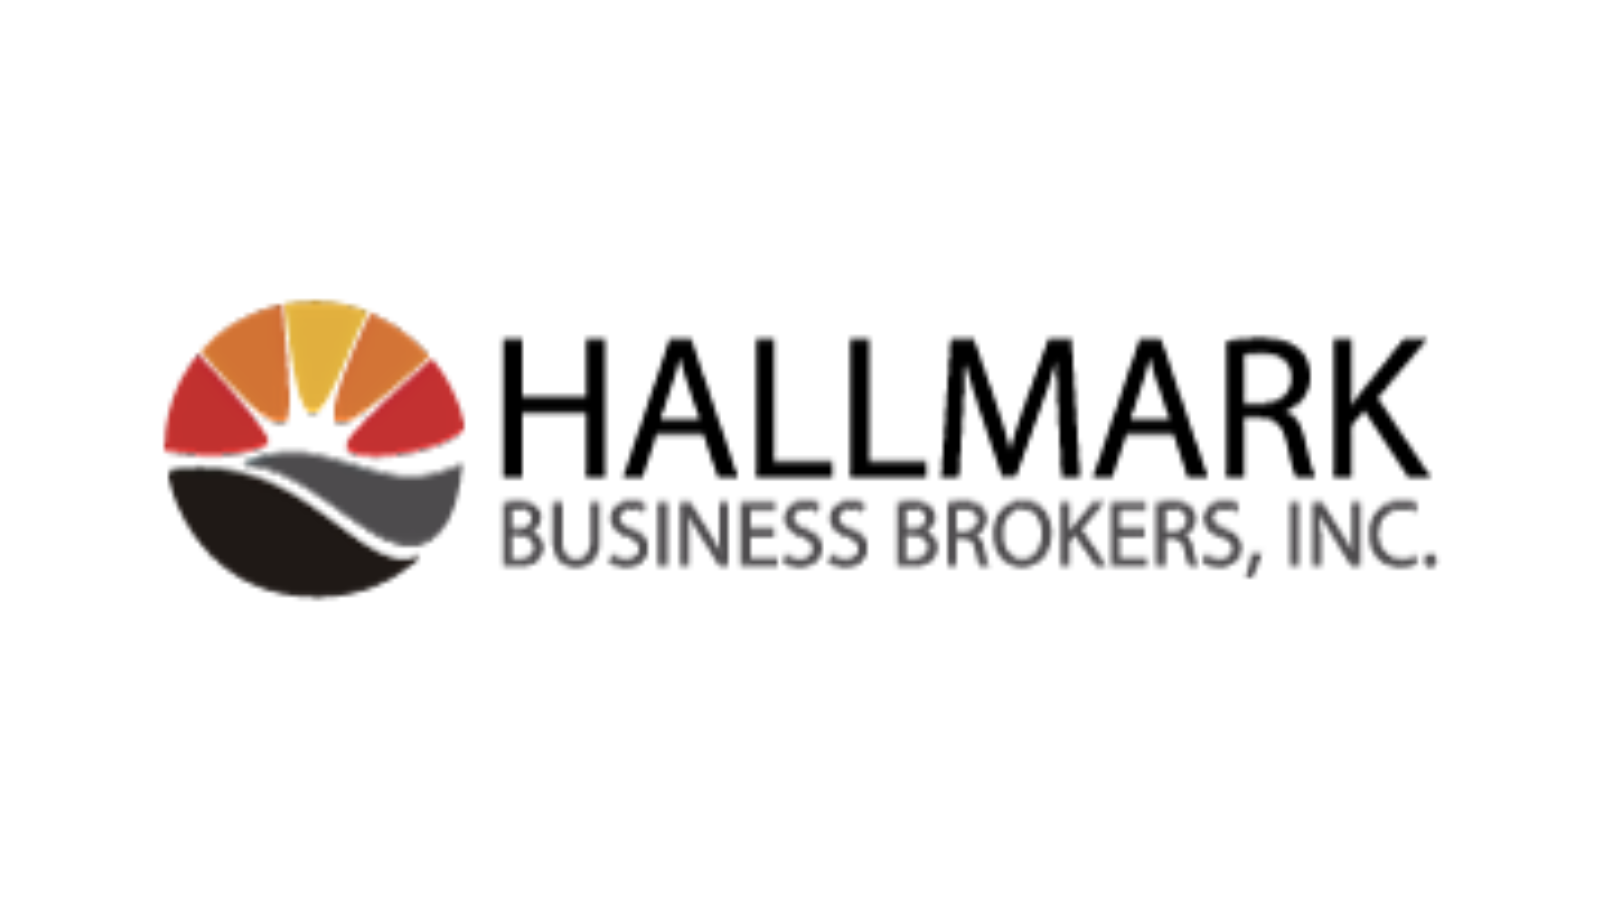 Hallmark Business Brokers, Inc.